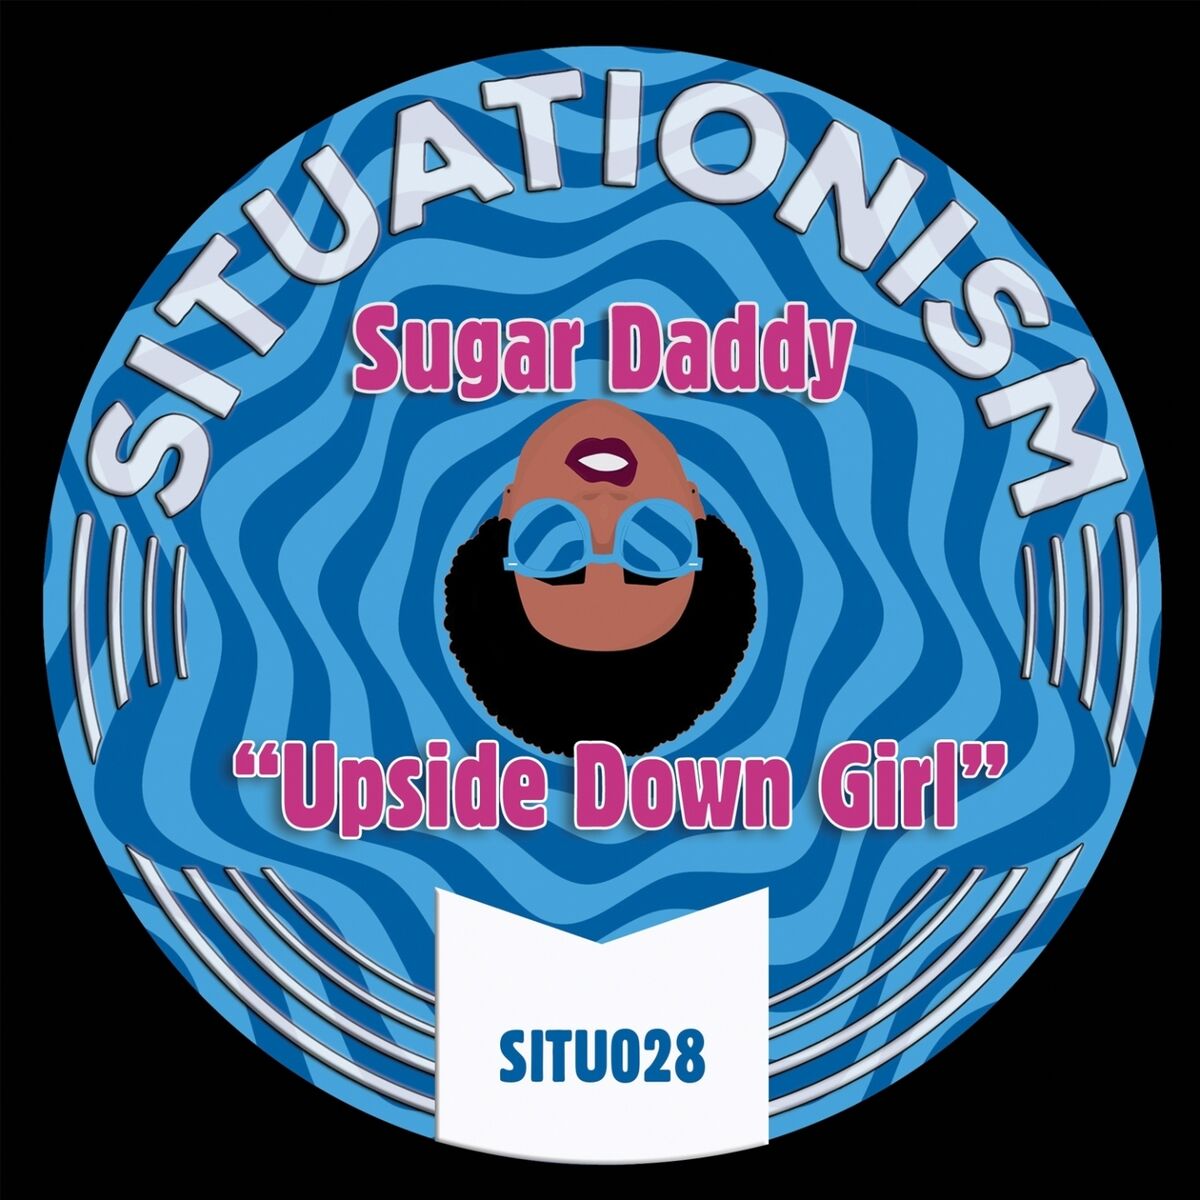 Sugar Daddy: albums, songs, playlists | Listen on Deezer